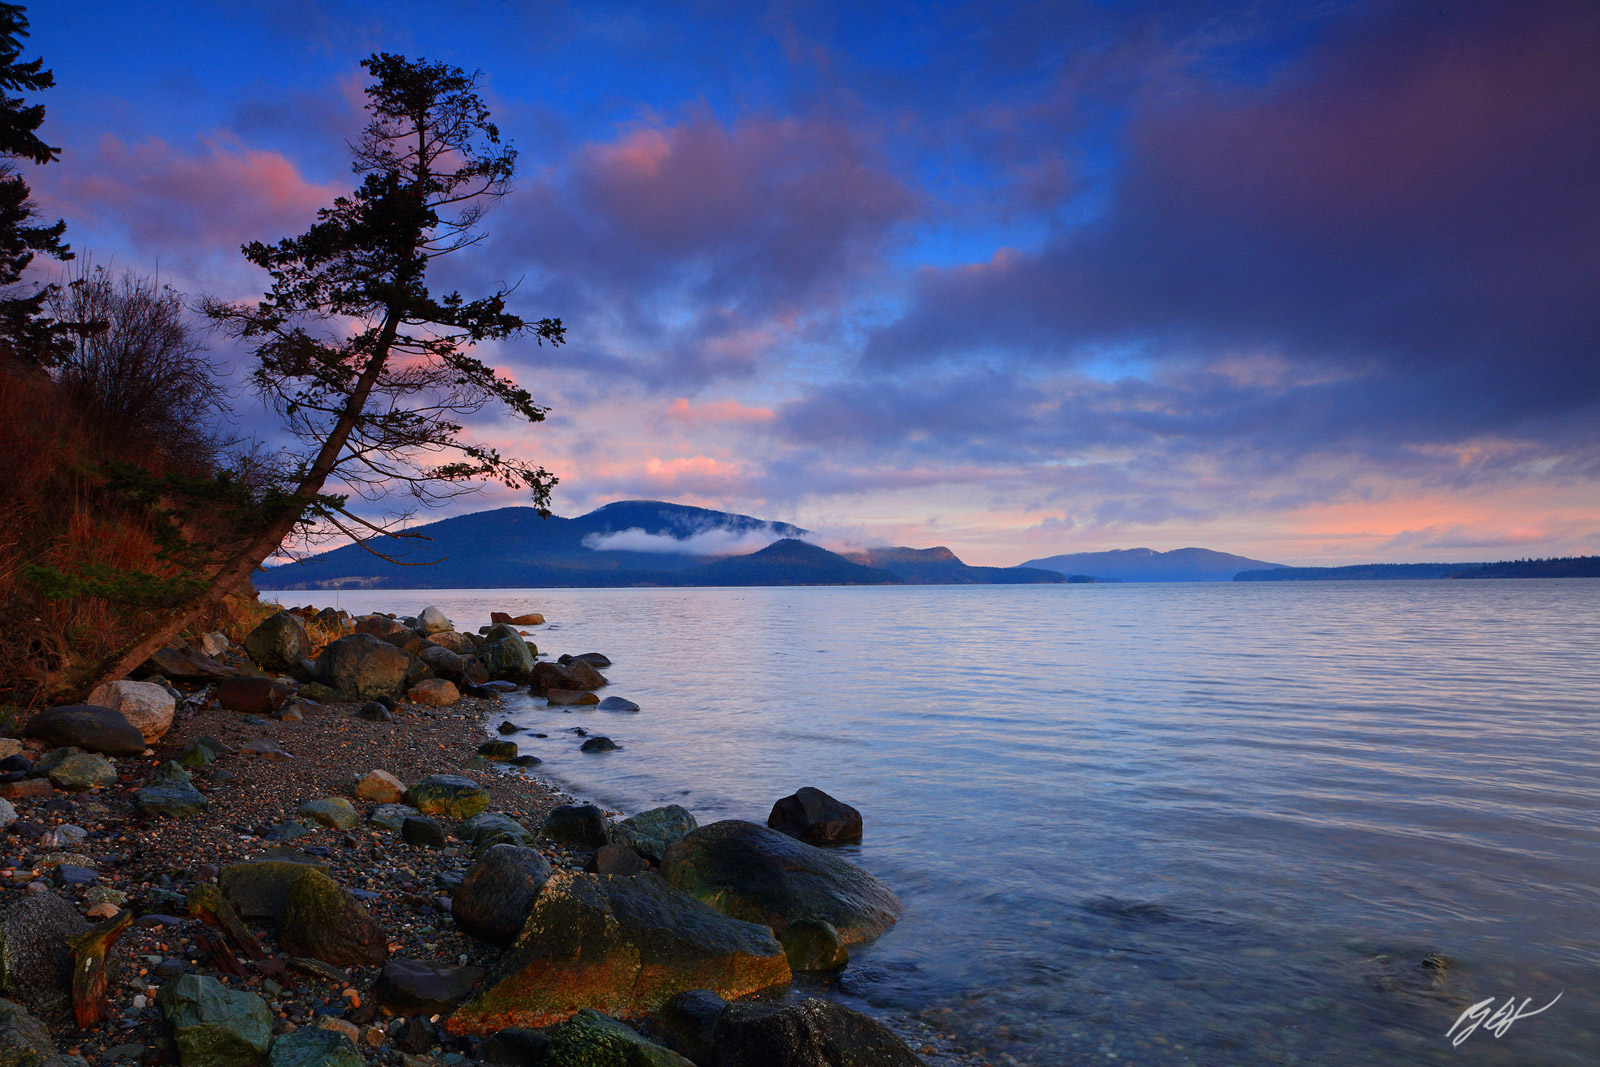 Sunrise and the San Juan Islands from Fidalgo Island in Anacortes, Washington